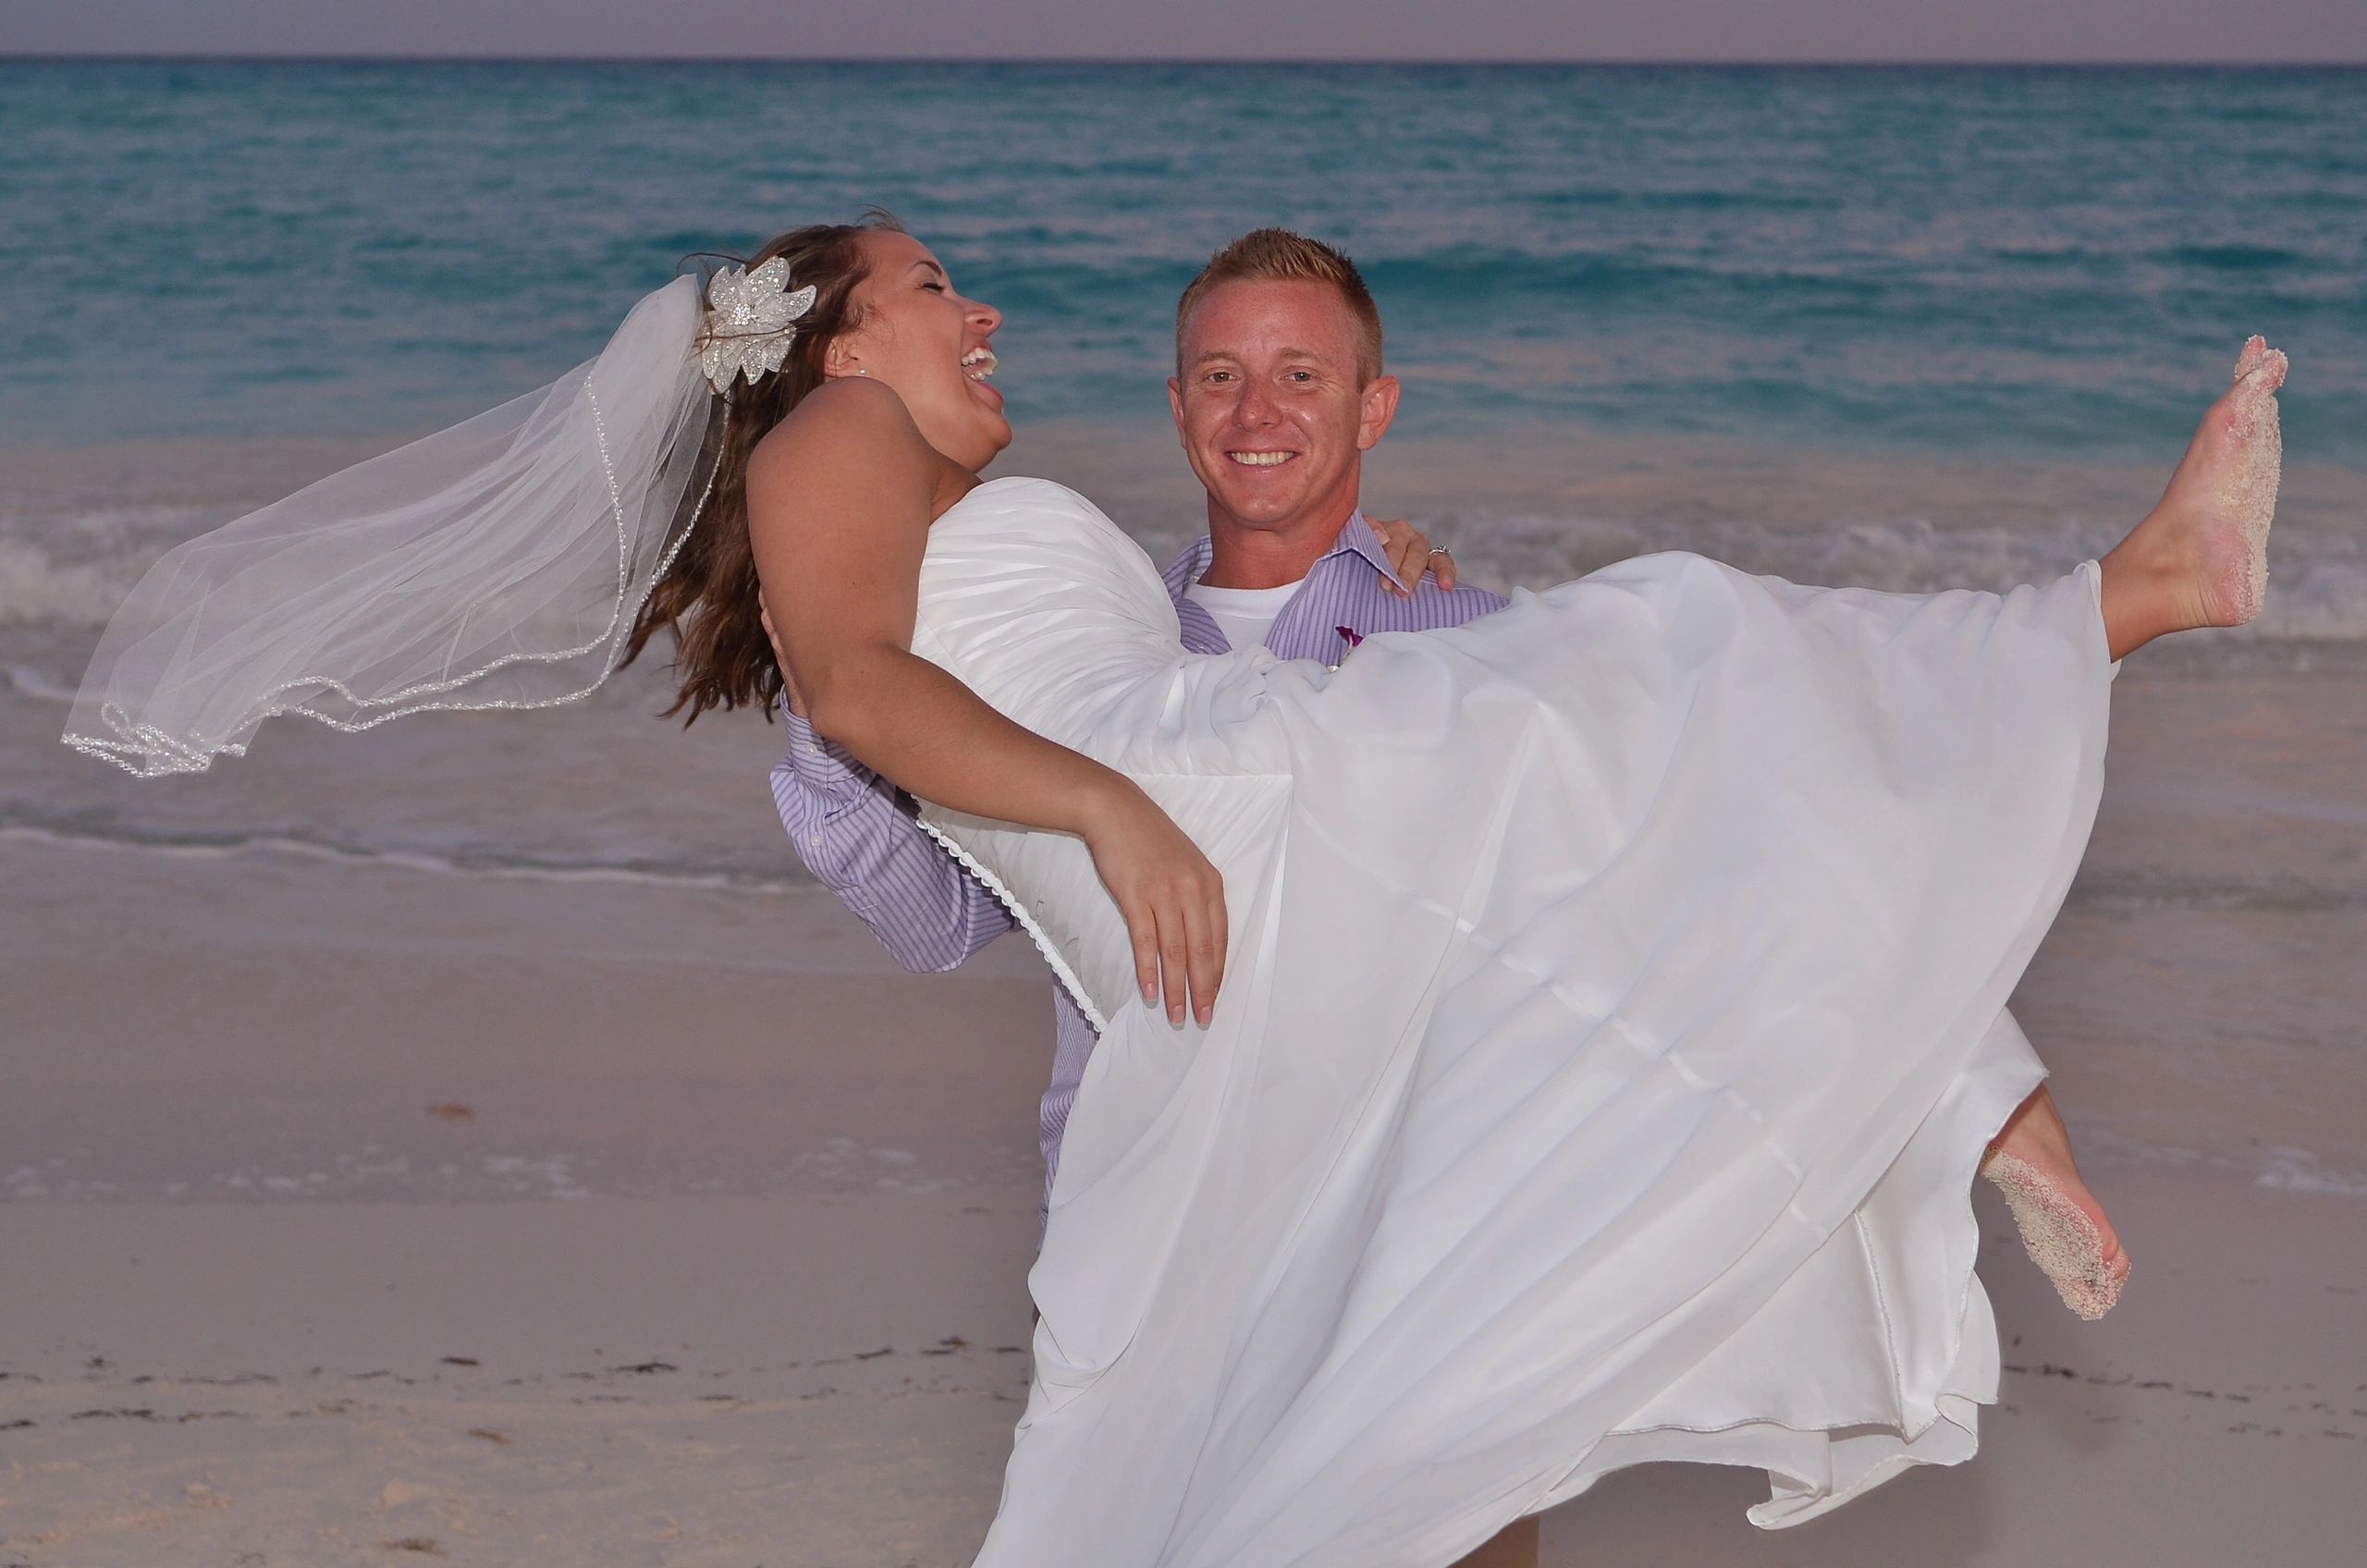 Man holding woman in a wedding dress on a beach